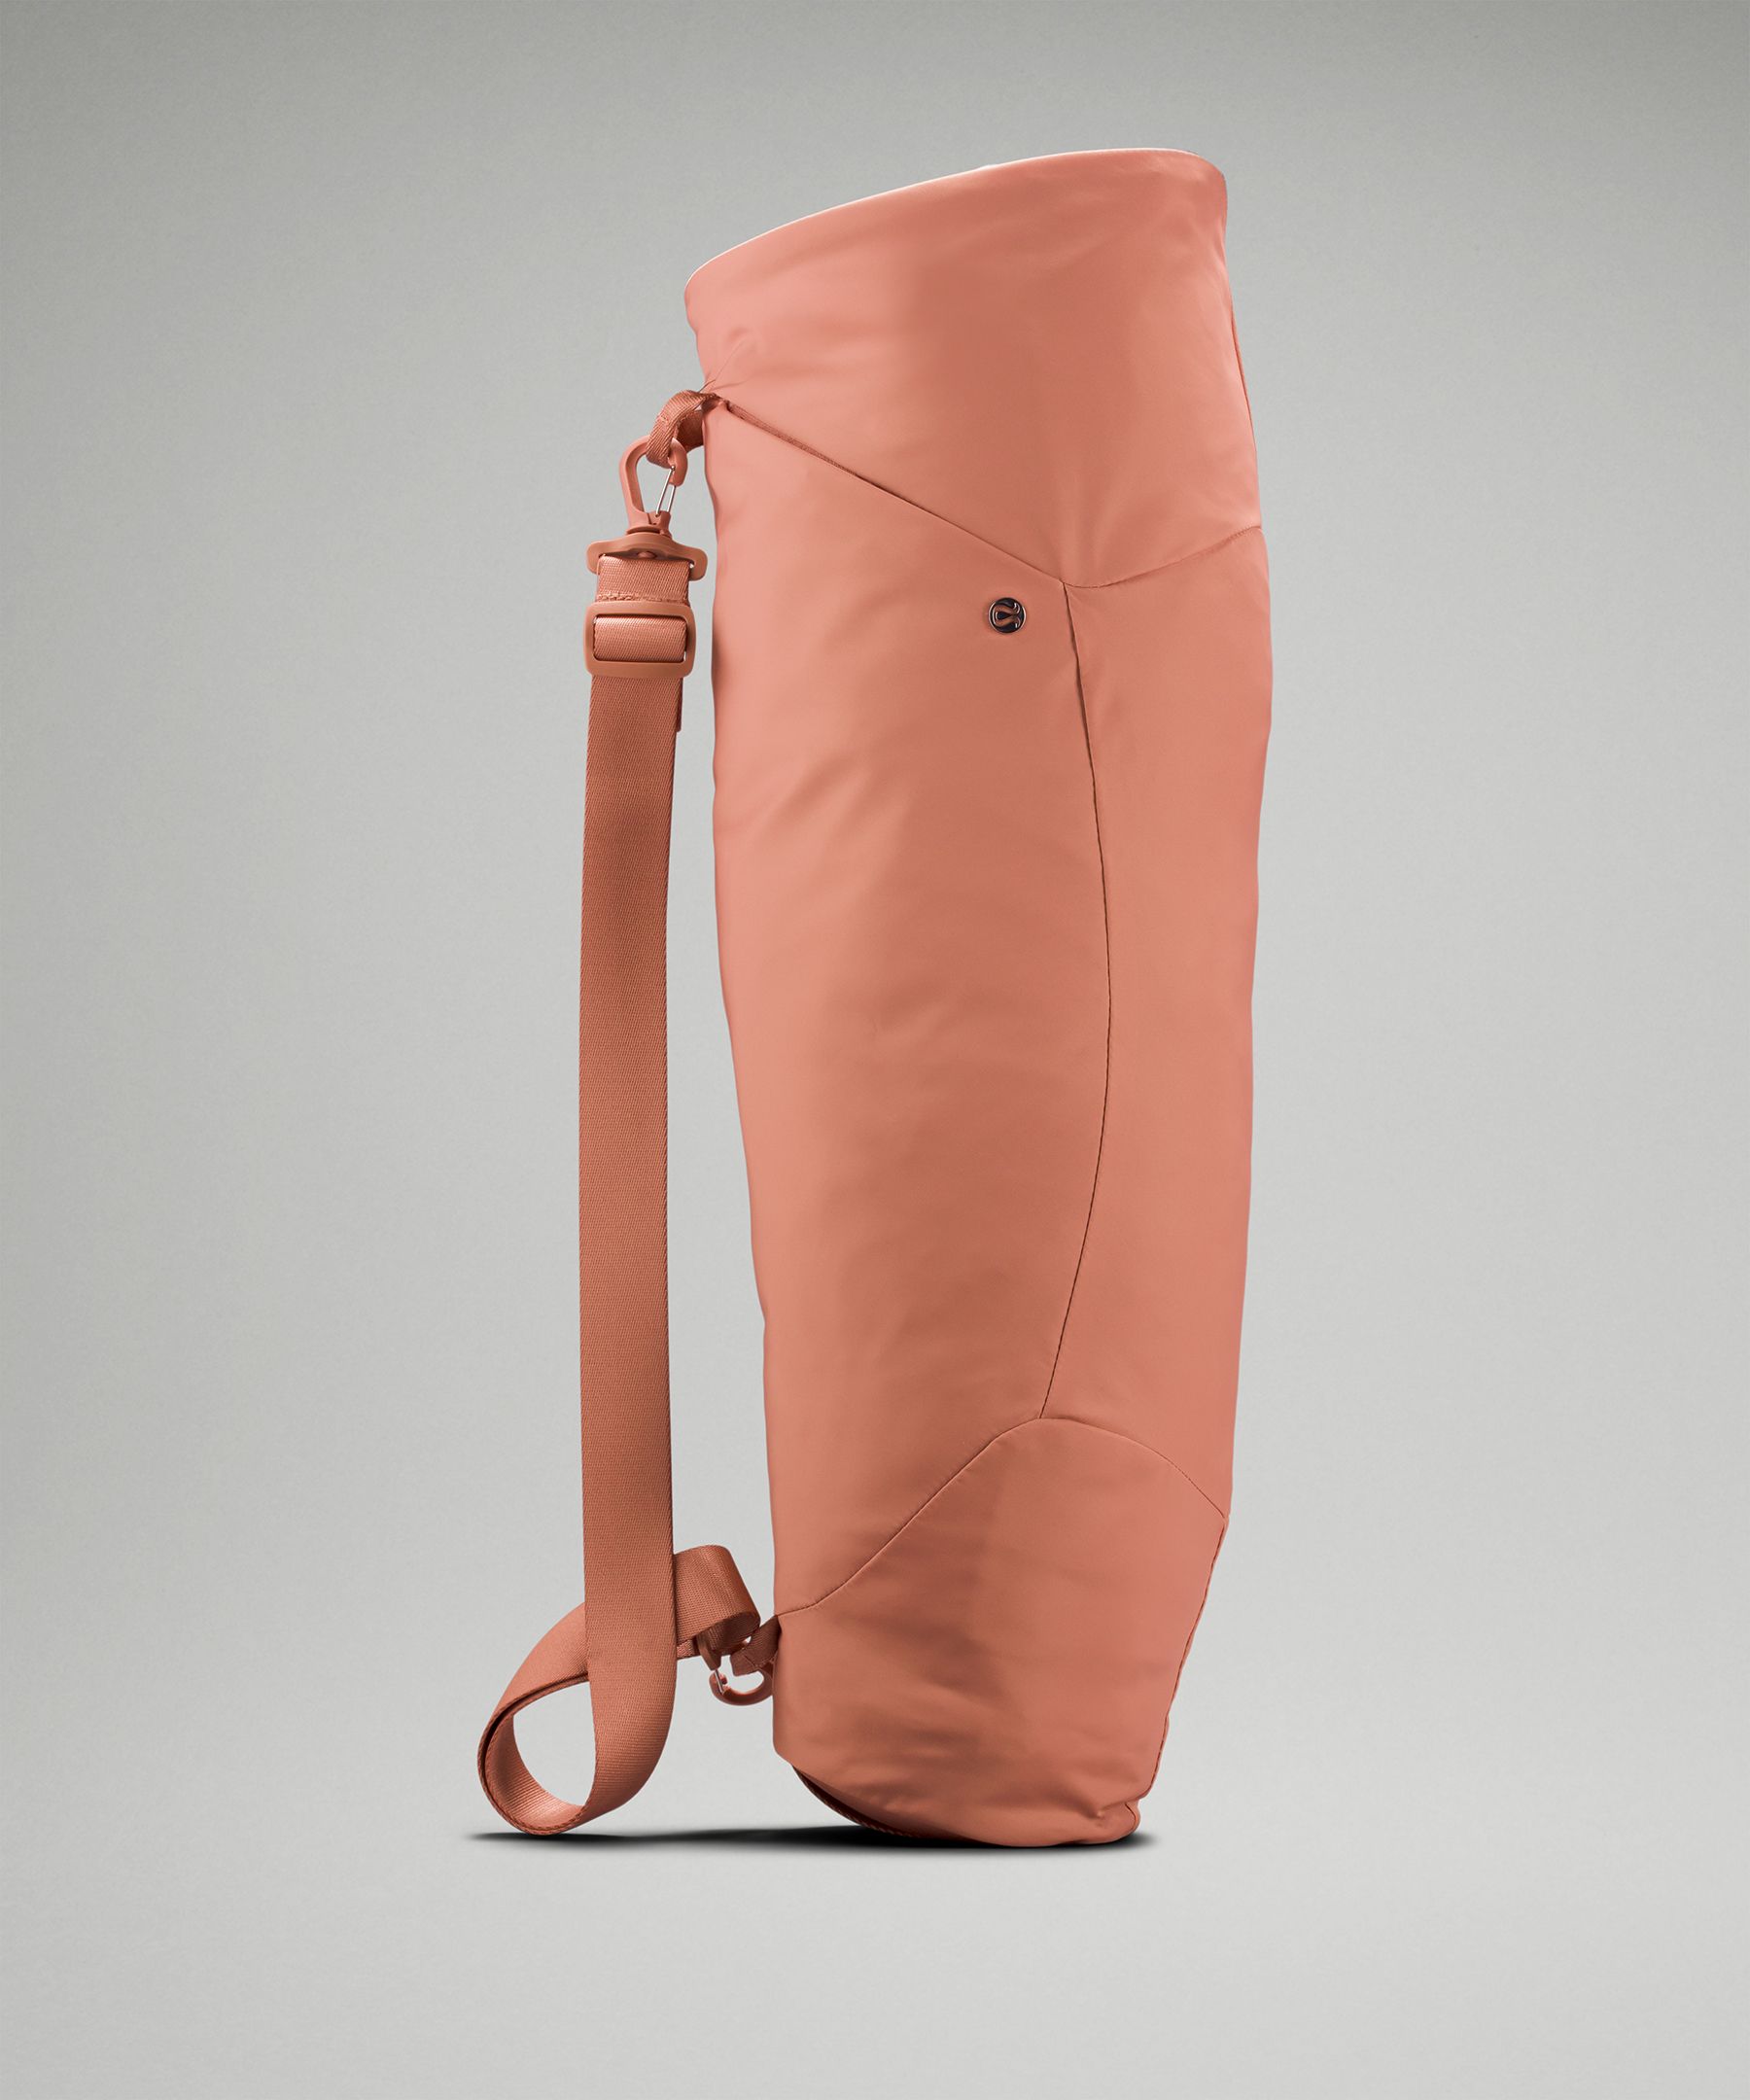 Adjustable Yoga Mat Bag, Bags